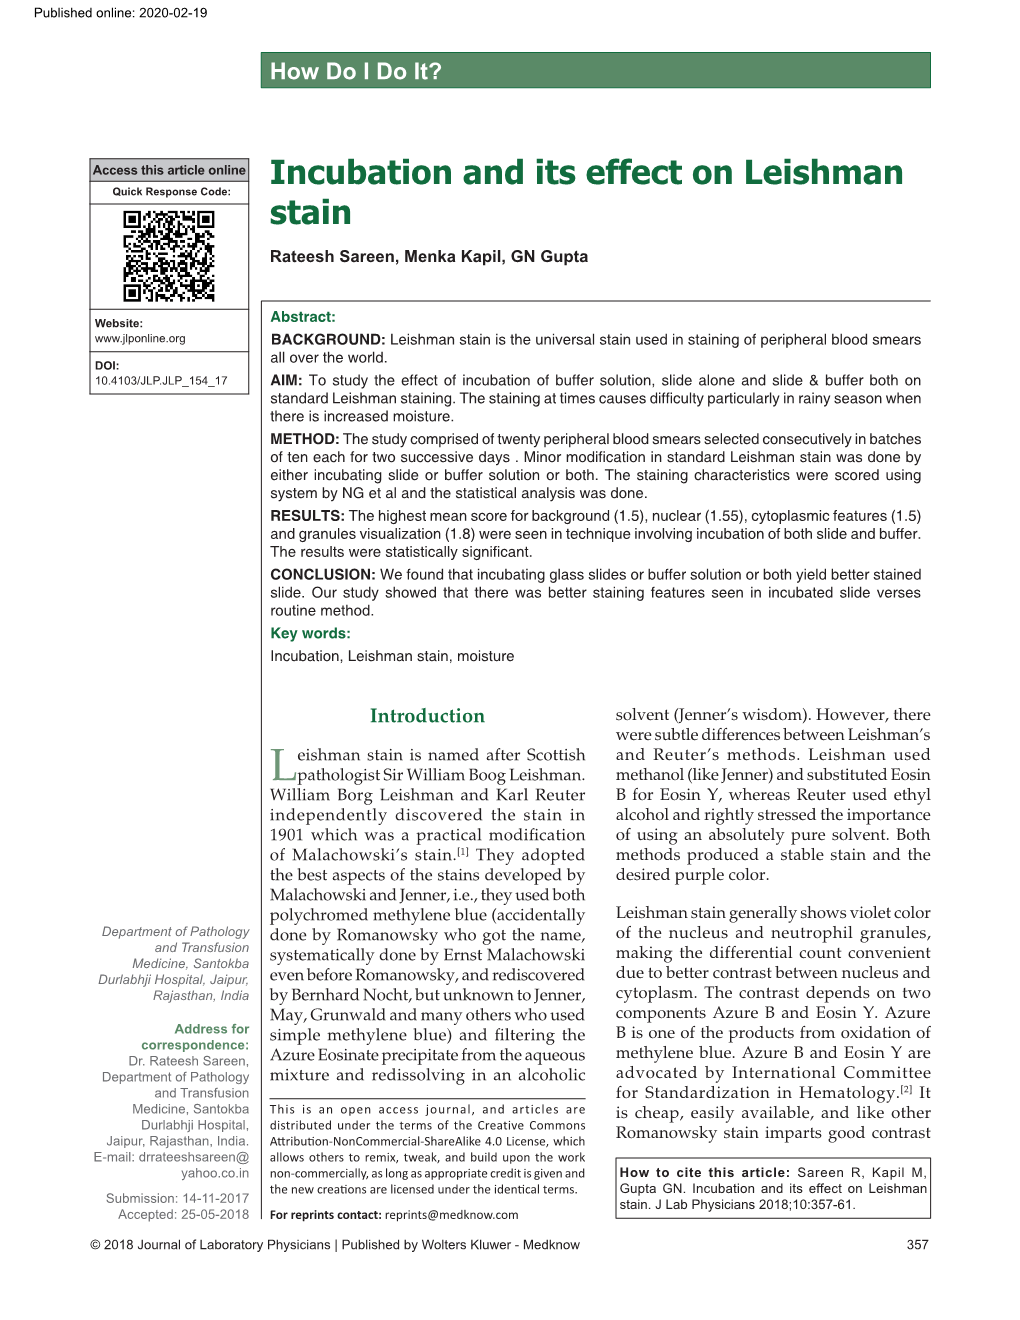 Incubation and Its Effect on Leishman Stain Rateesh Sareen, Menka Kapil, GN Gupta